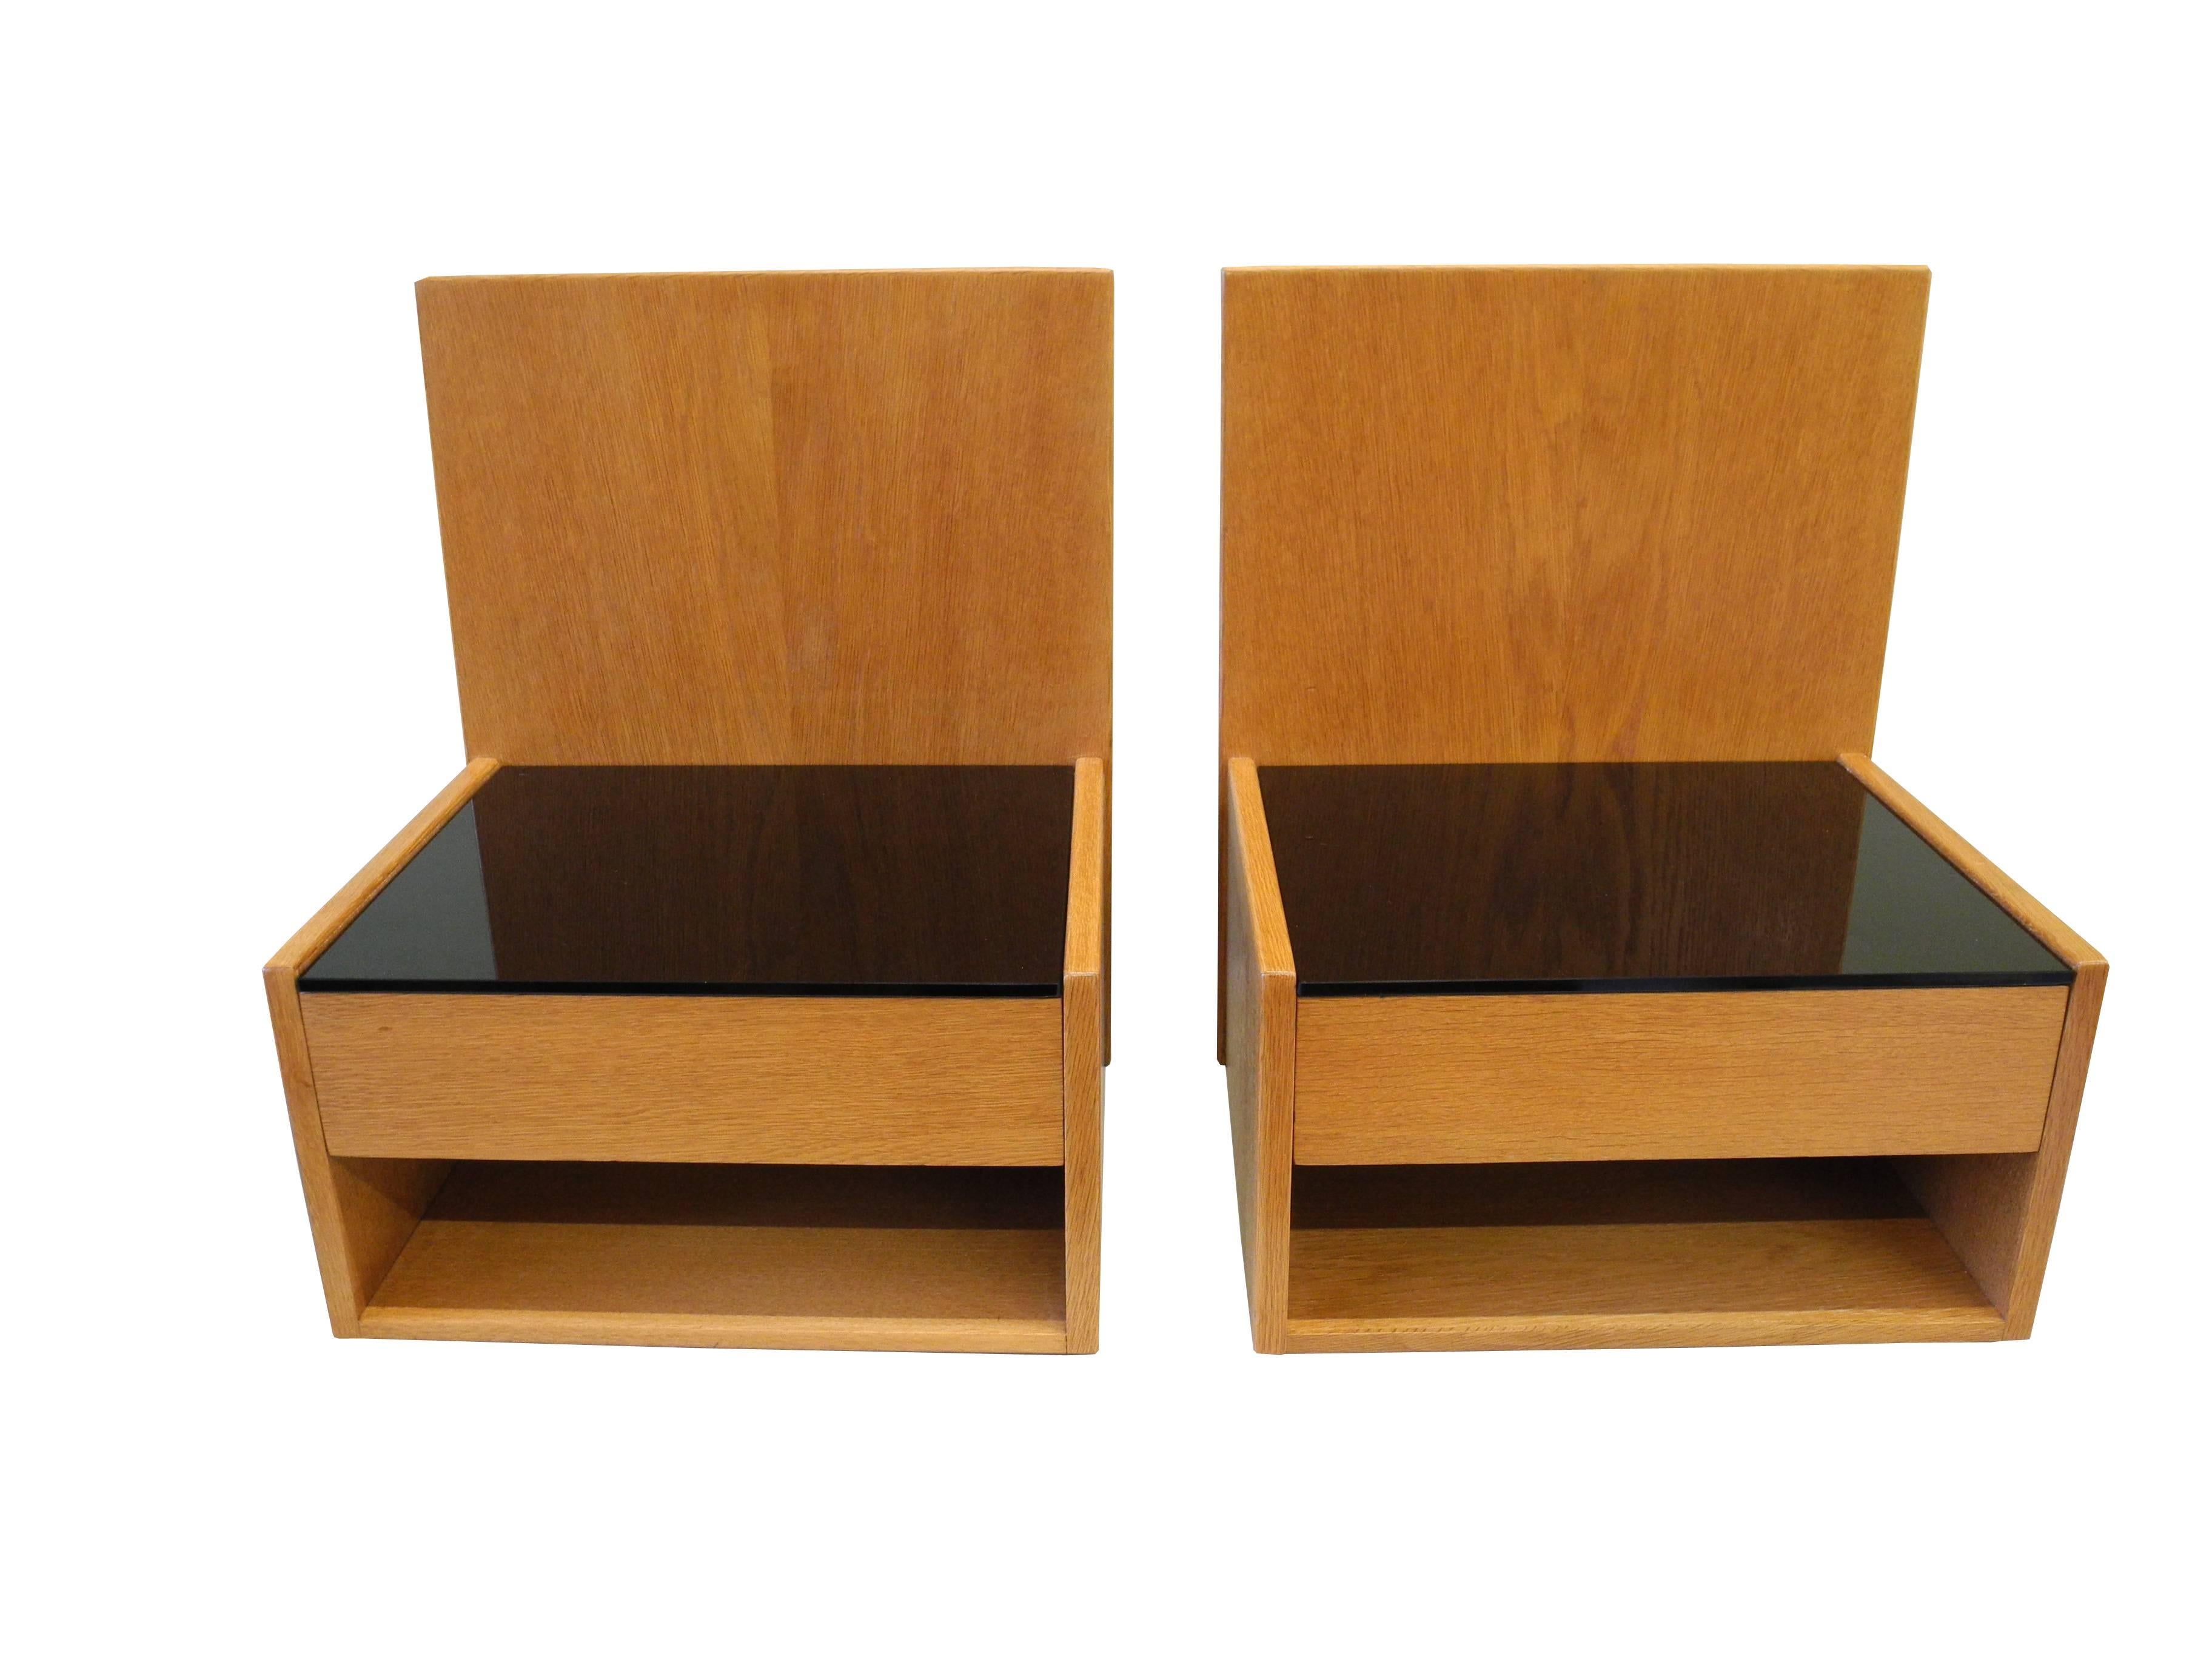 Pair of Danish Modern Teak Nightstands Designed by Hans Wegner In Good Condition For Sale In Hudson, NY